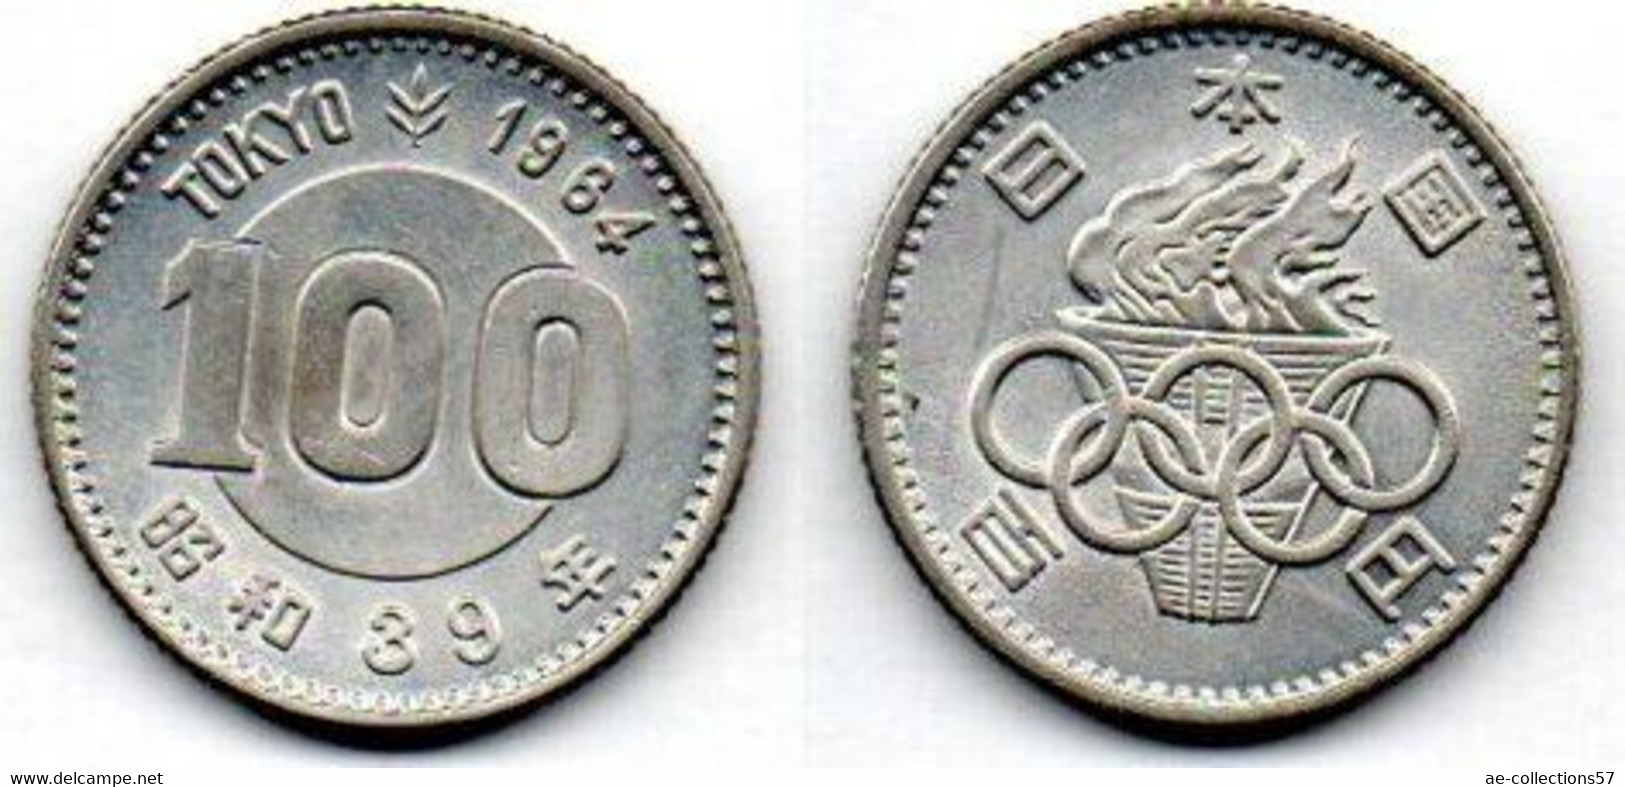 Japon - Japan 100 Yen 1964 TTB - Giappone